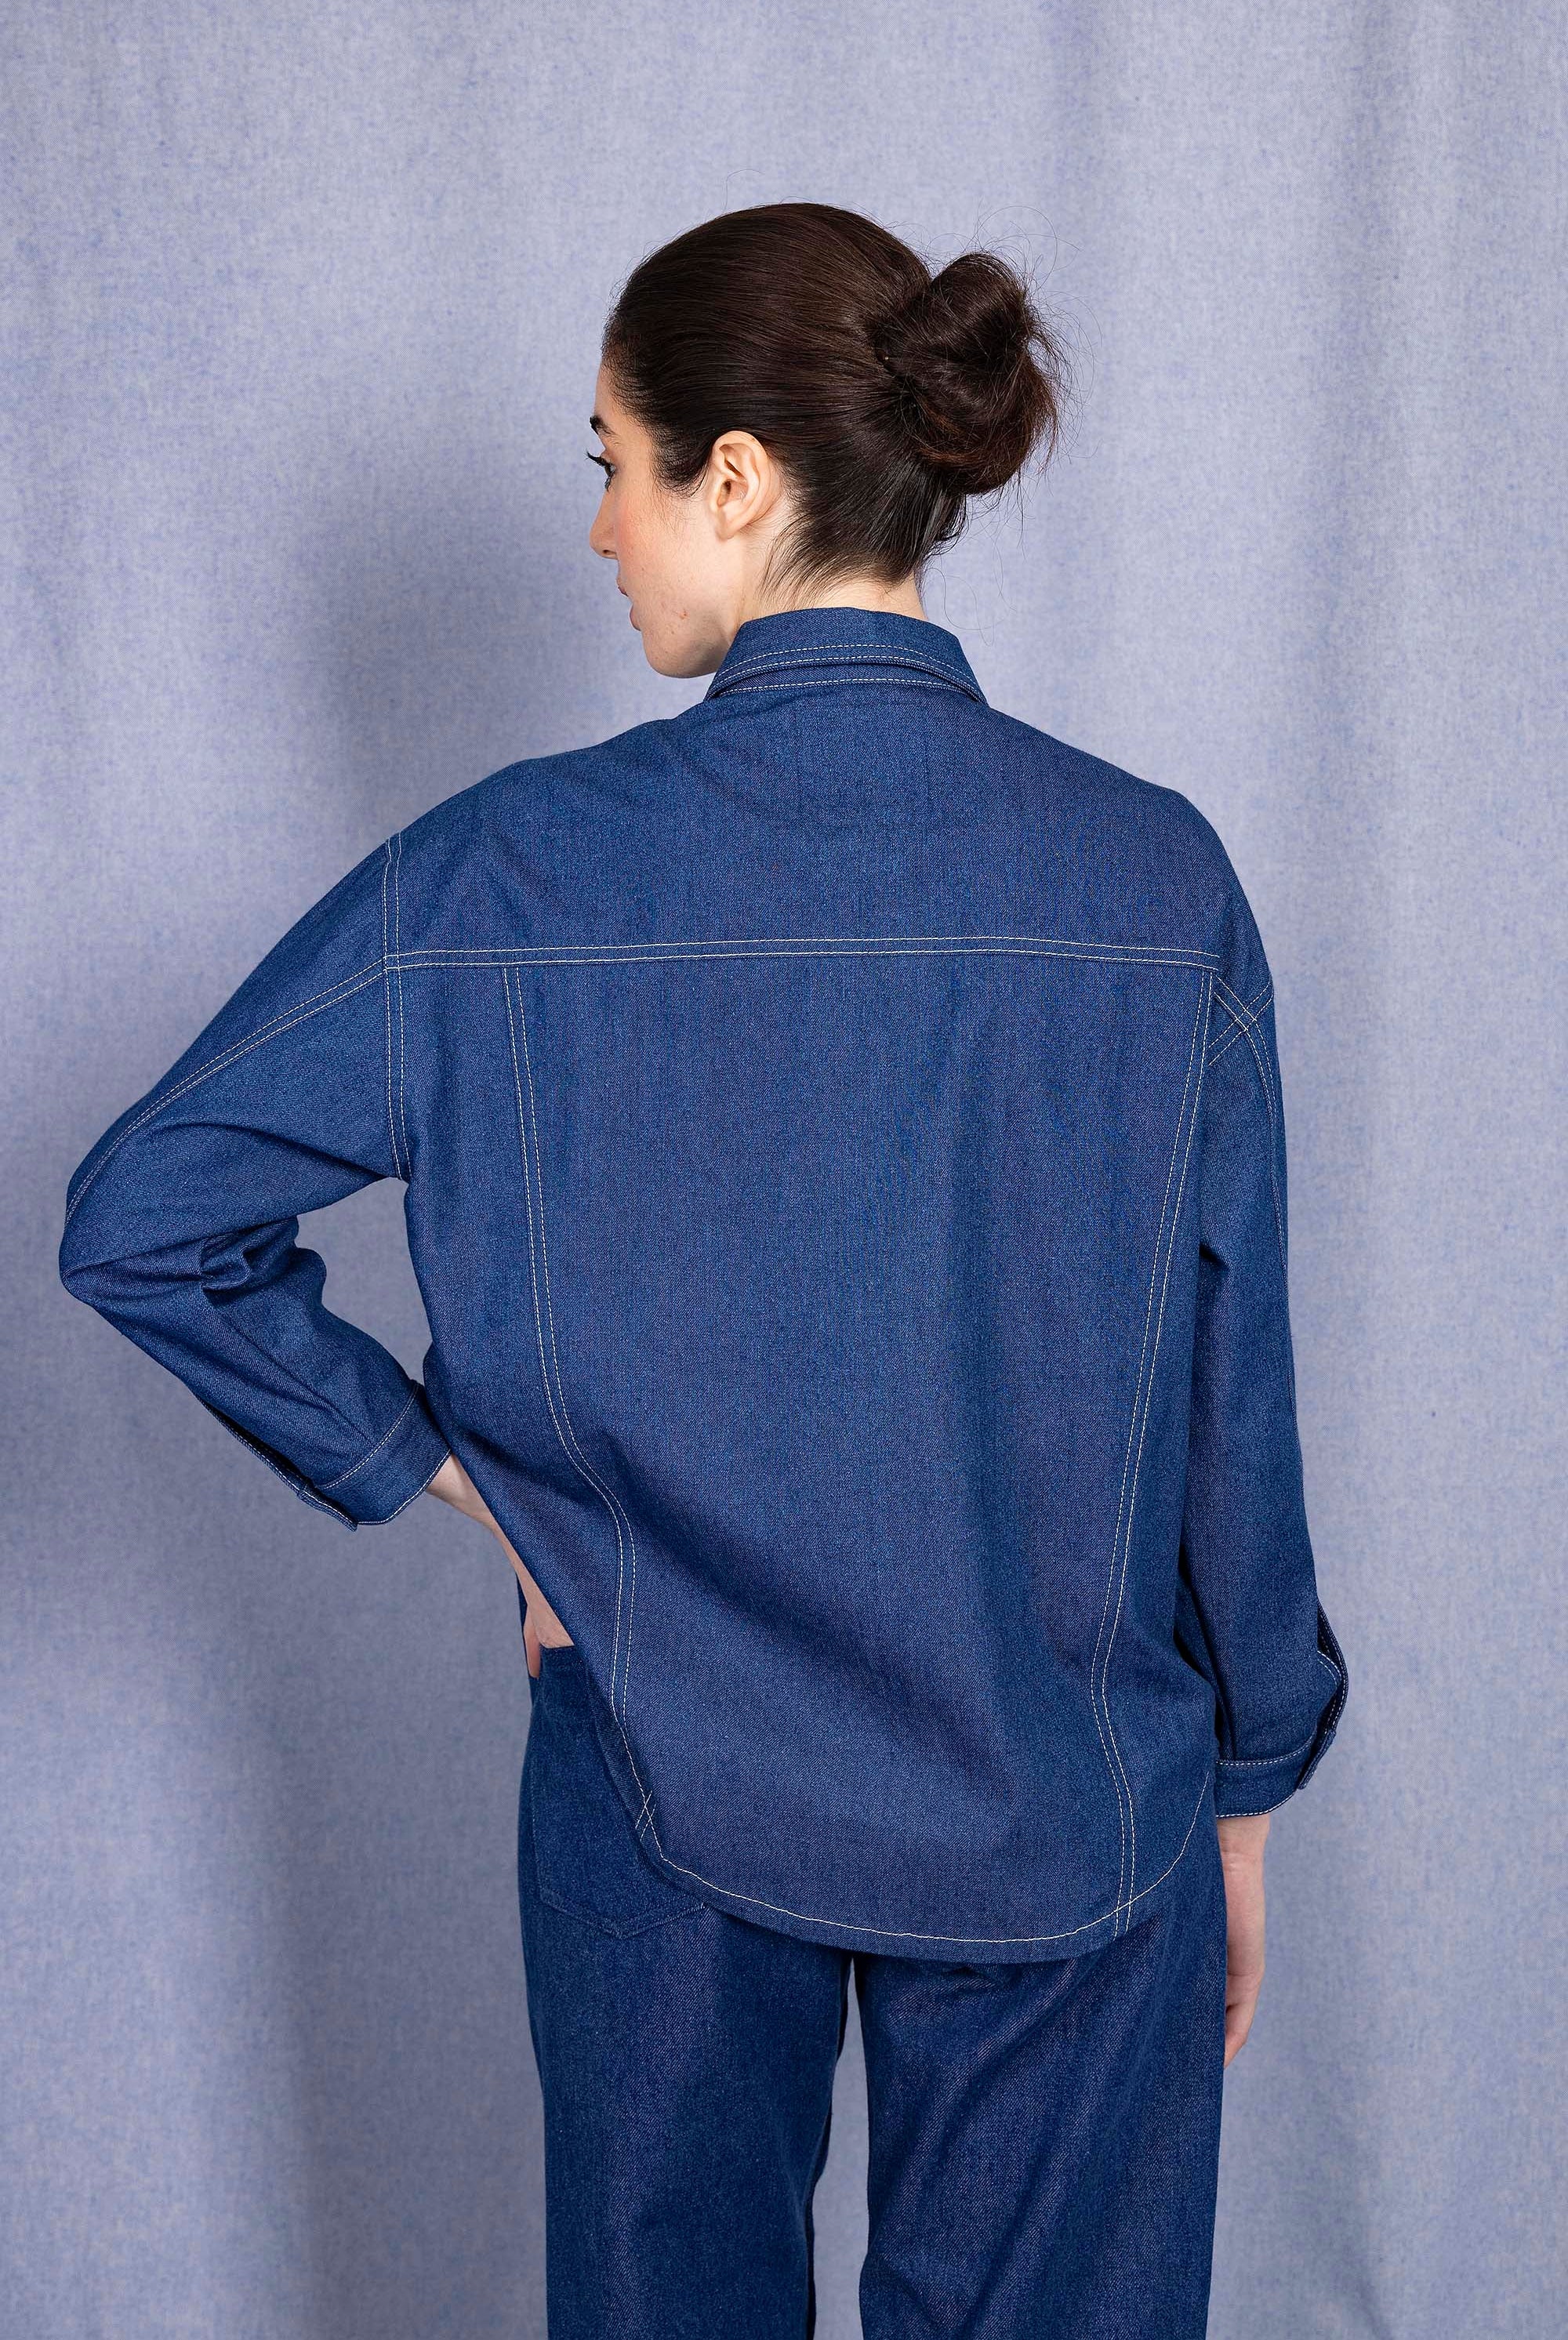 Chemise Attis Bleu Denim chemise femme, grand incontournable du vestiaire féminin